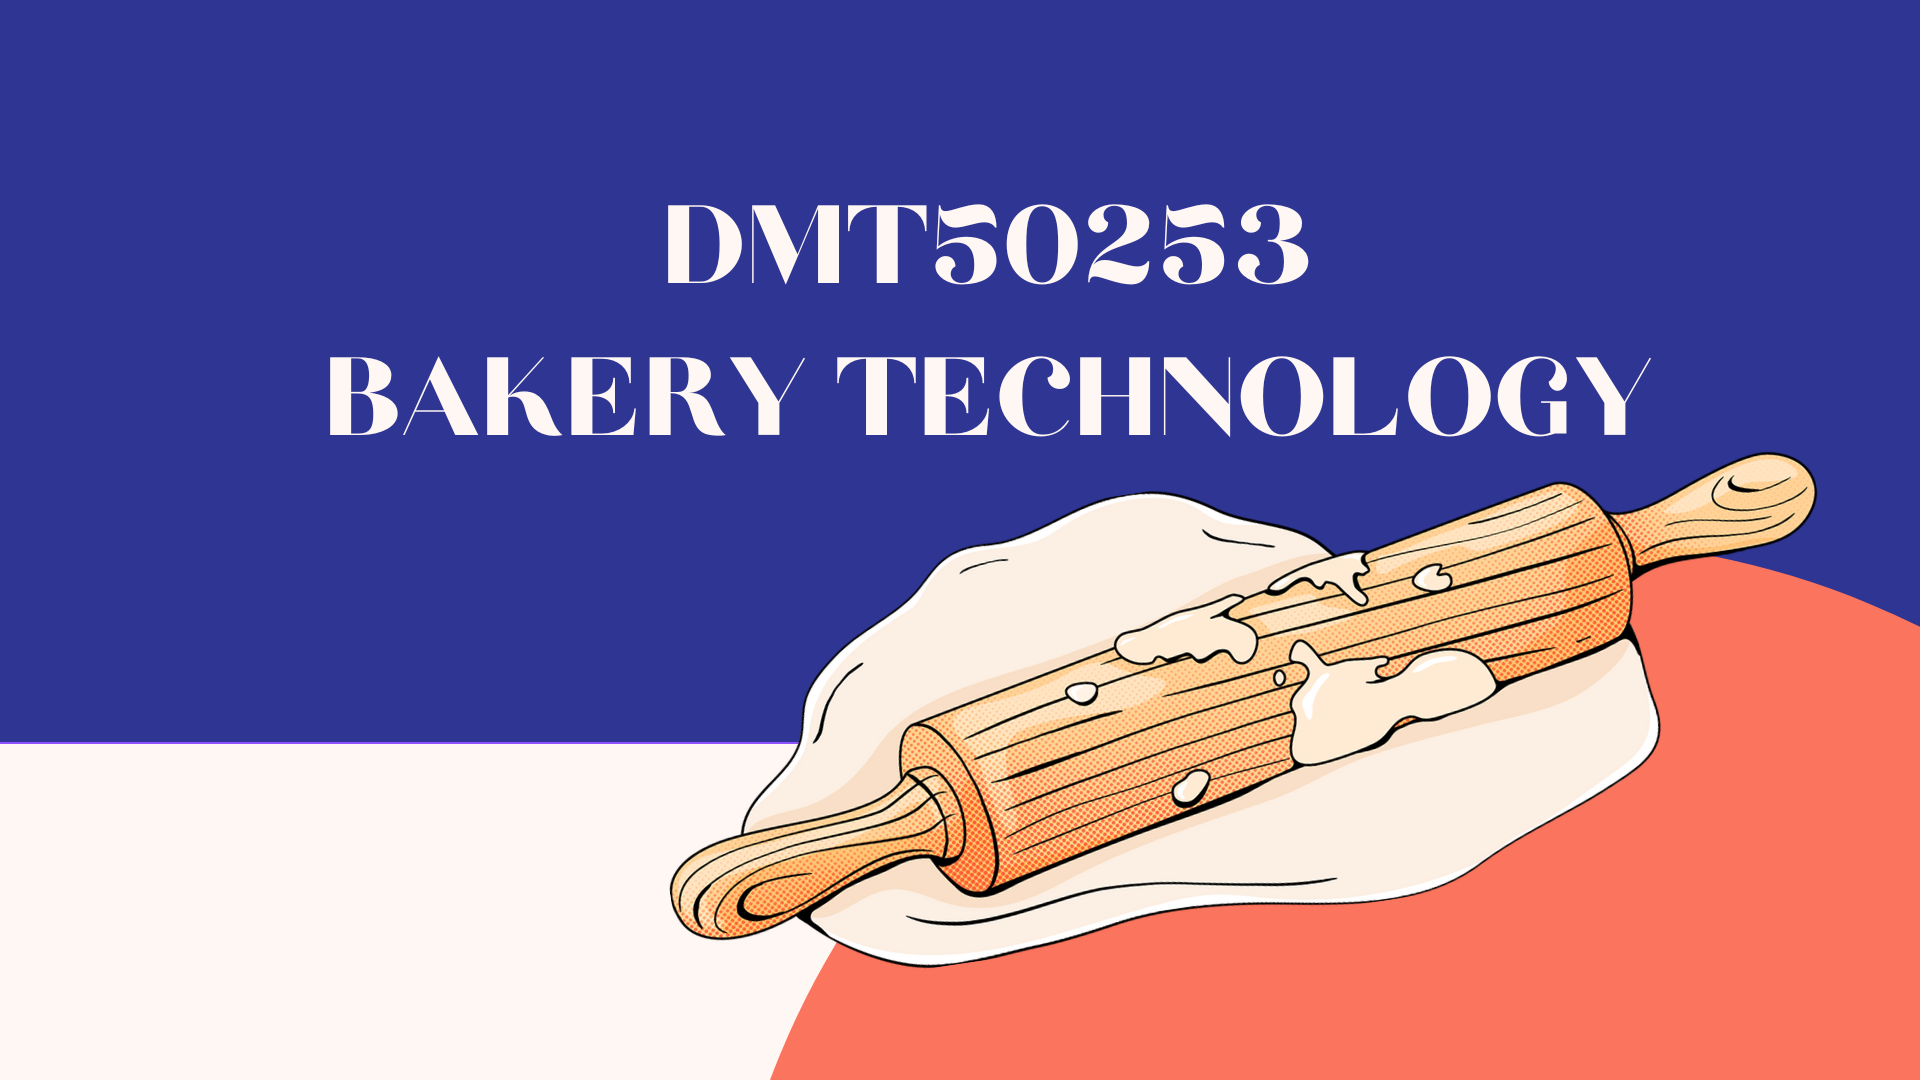 DMT50253 Bakery Technology